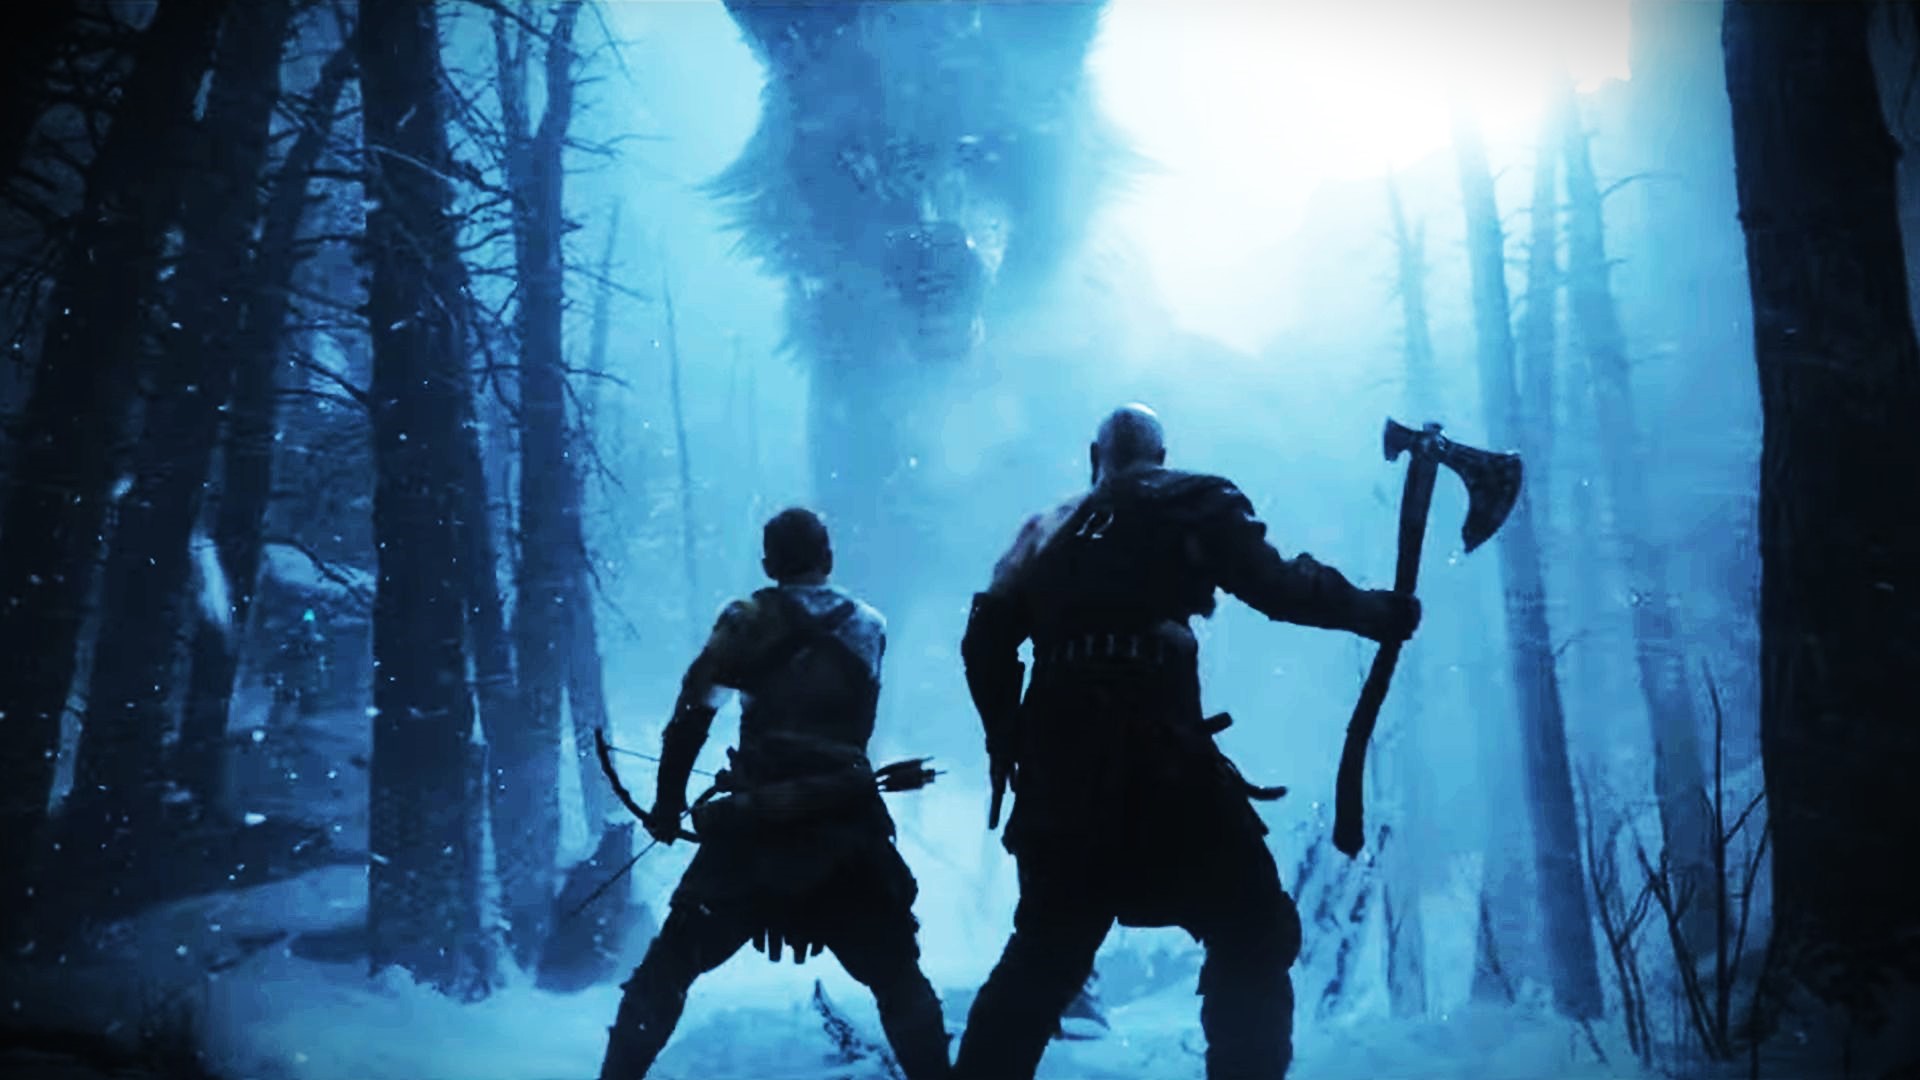 God of War Ragnarok will release in 2022, says dev